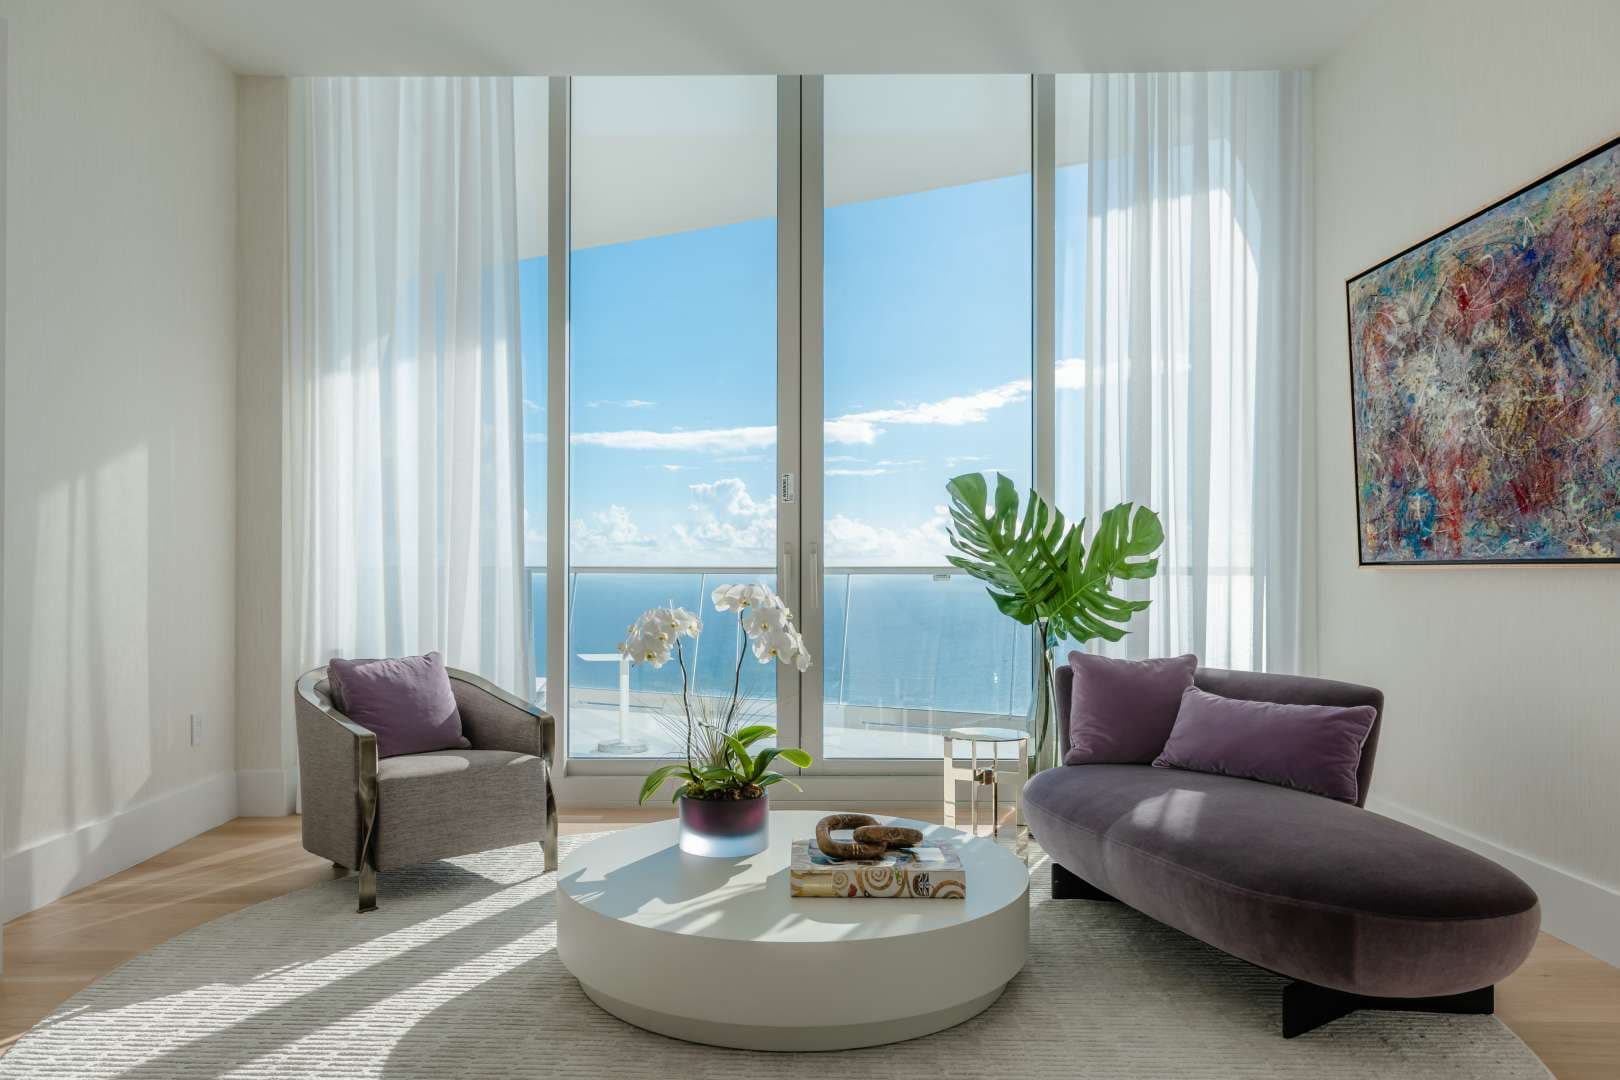 6 Bedroom Penthouse For Sale Miami Lp10448 15a43e33a6a1a200.jpg